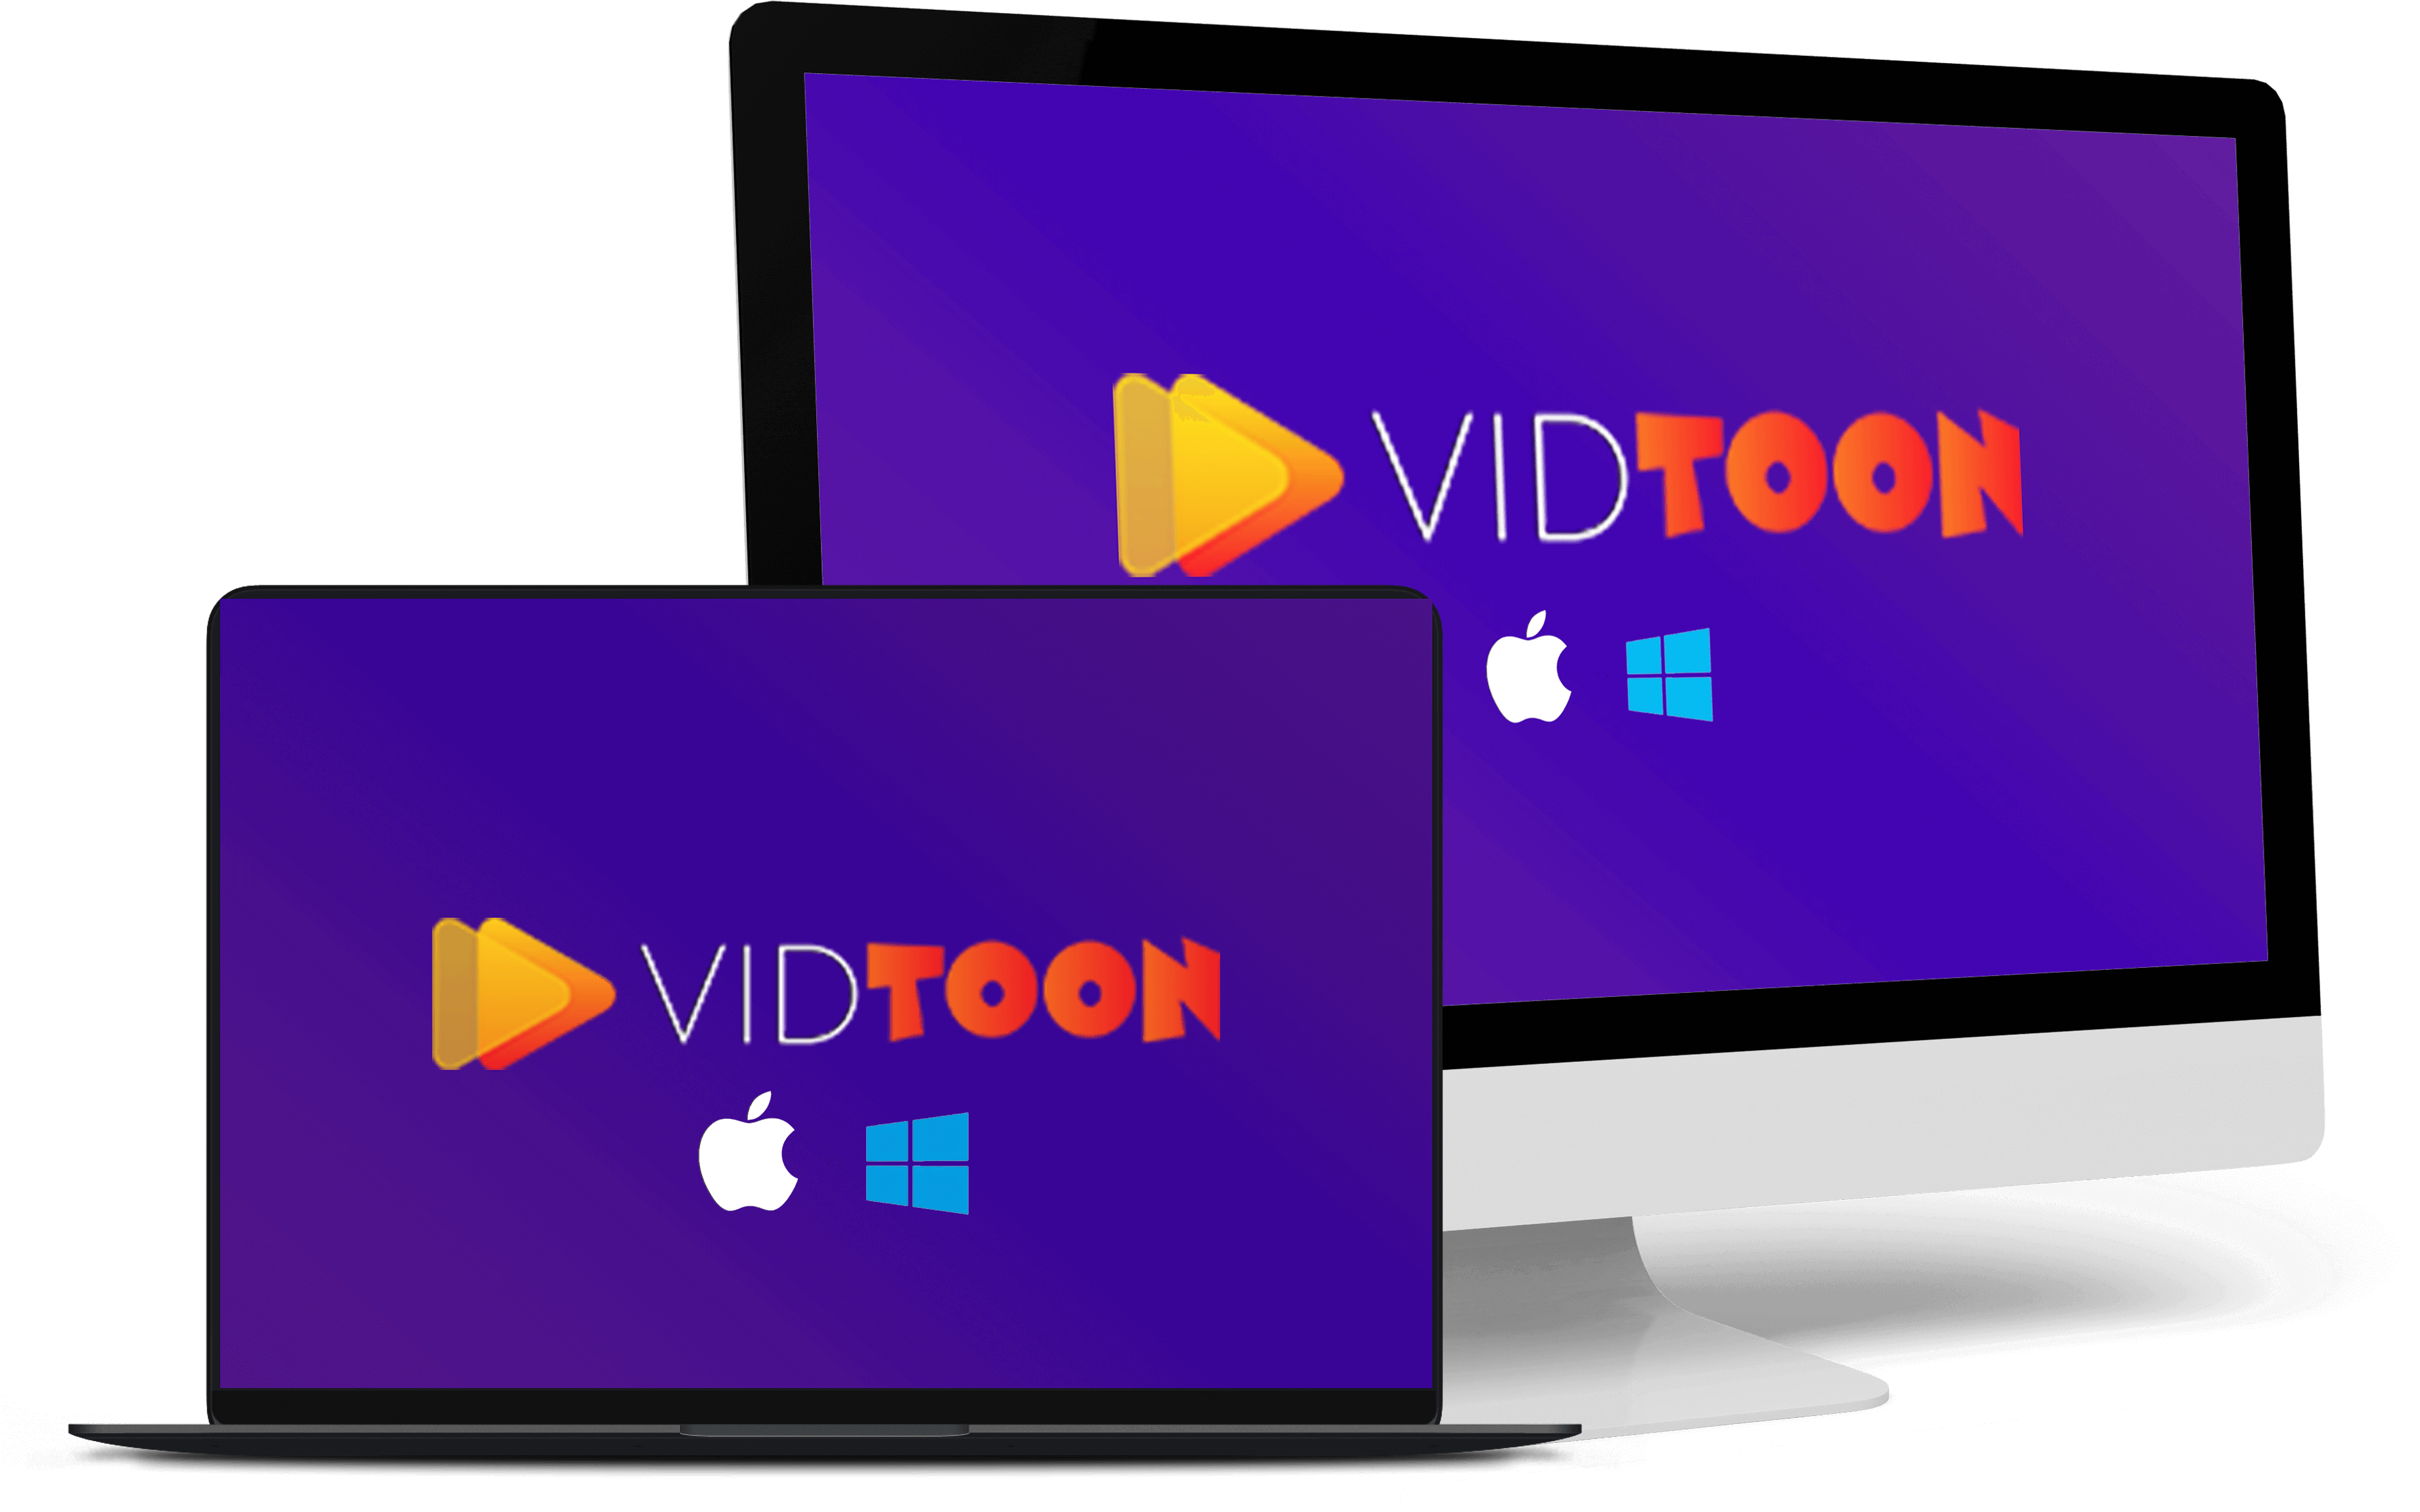 Marketing Video Making Software Vidtoon